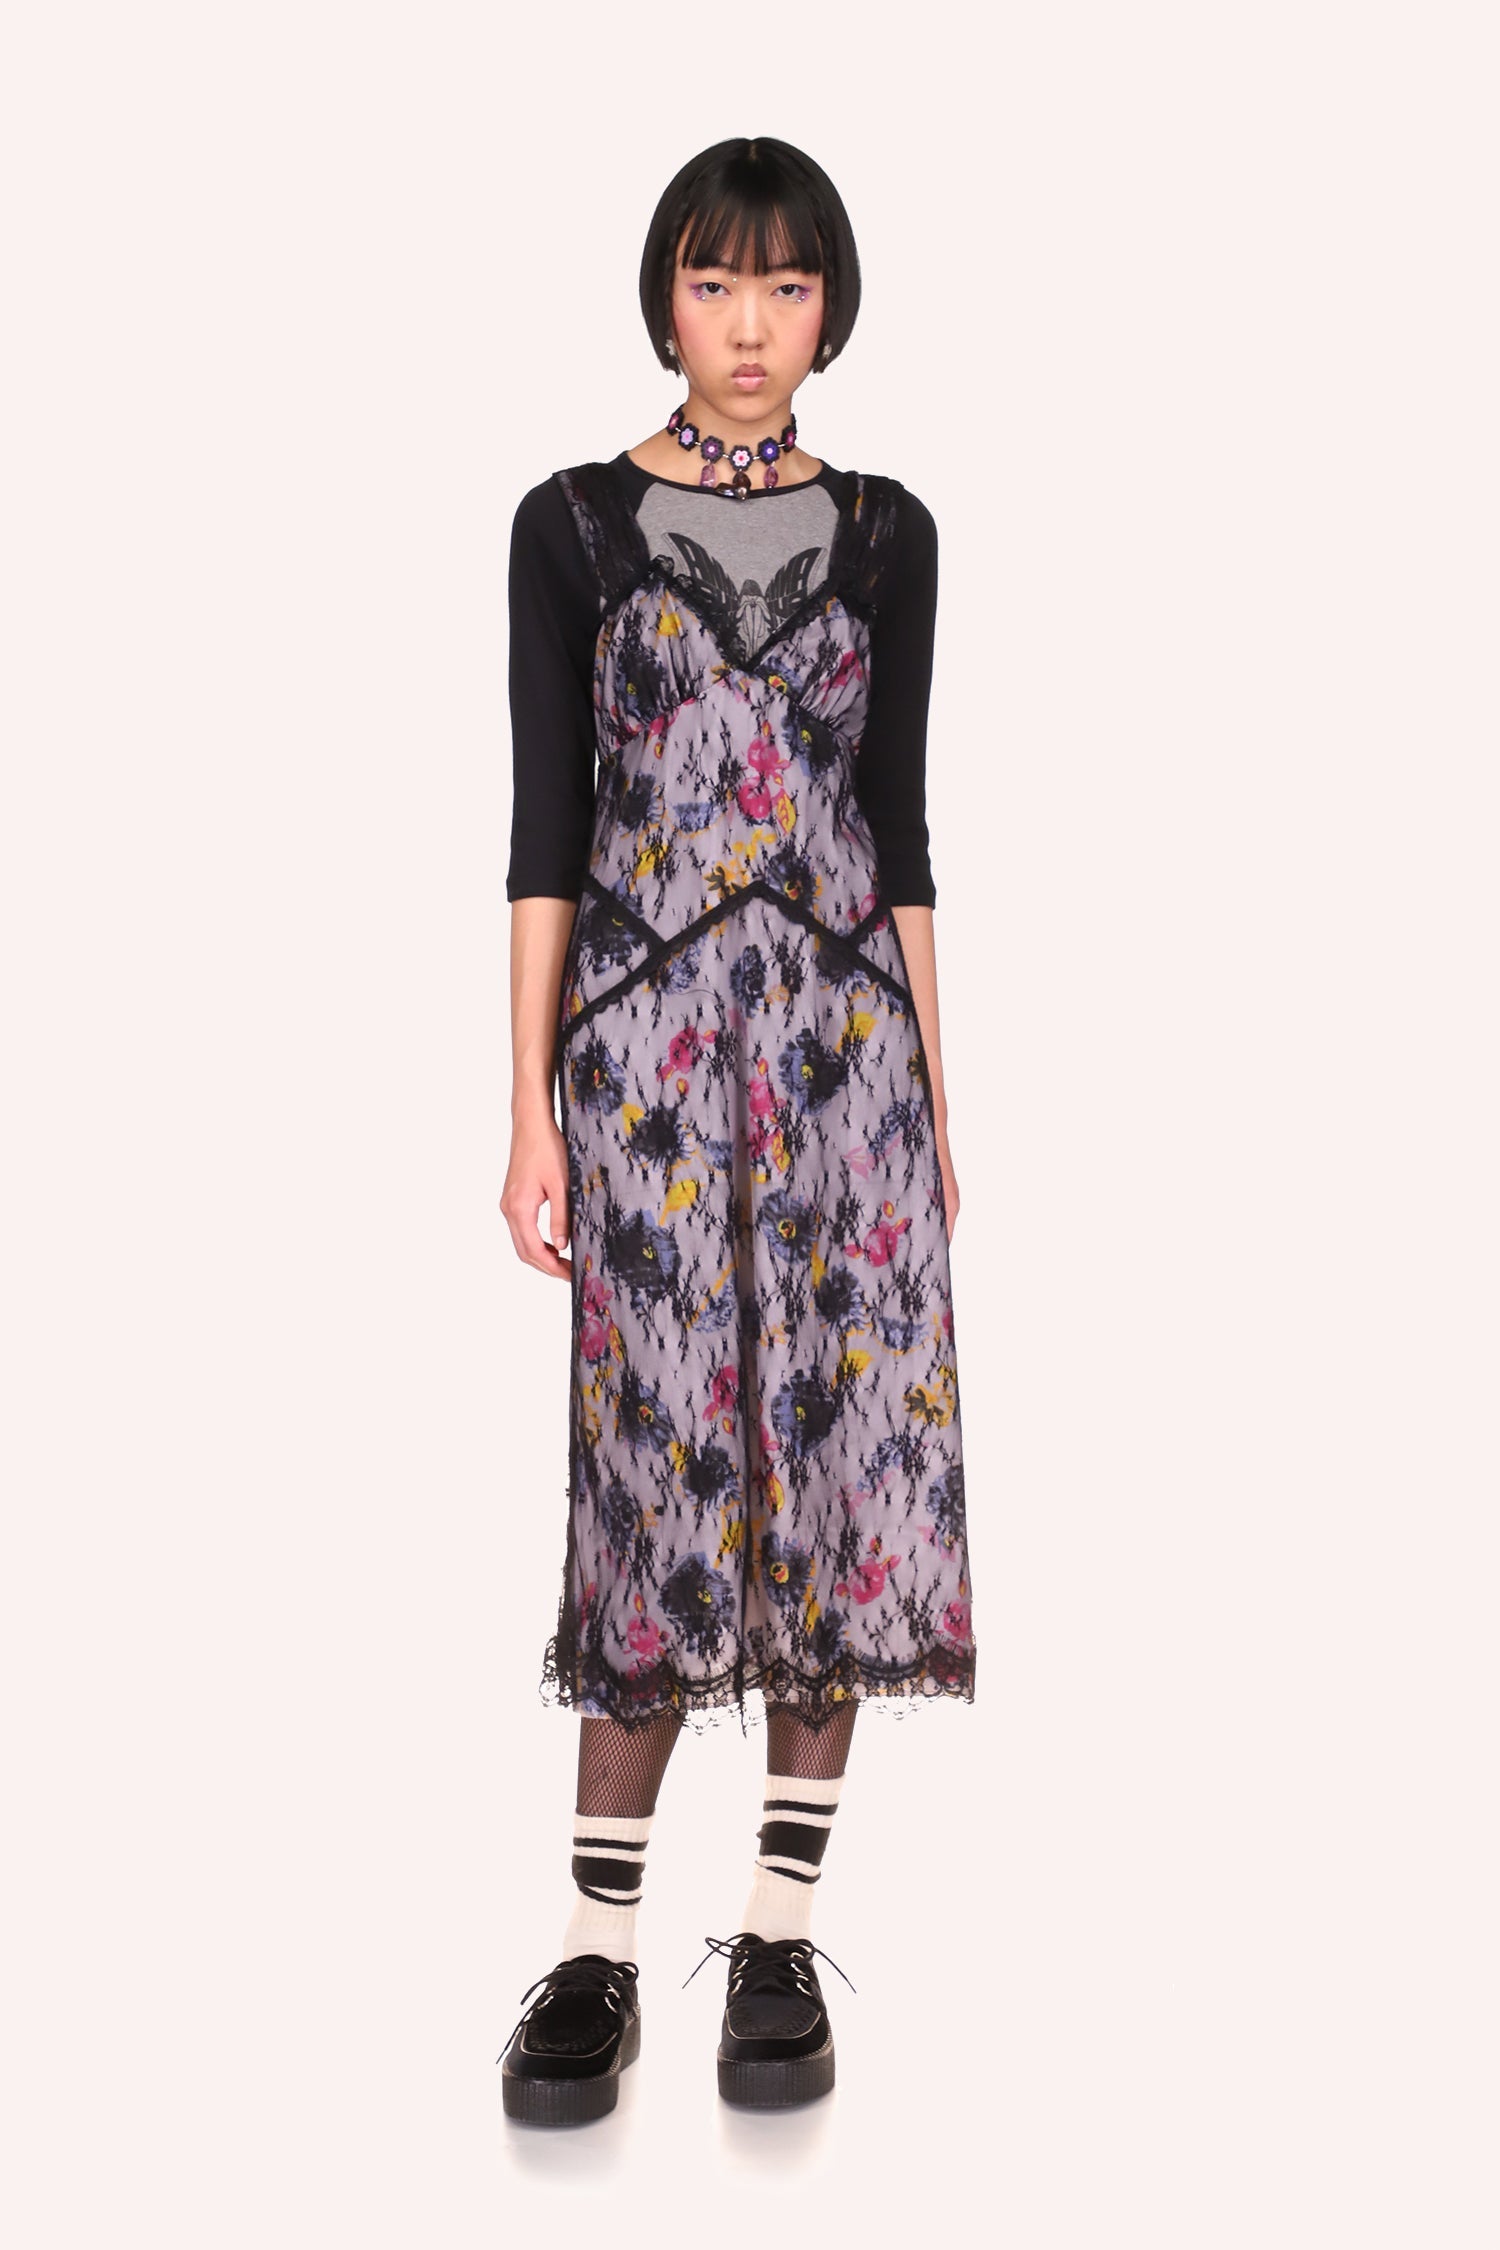 Sketch Flower, Lace Slip Dress sleeveless, lilac, pink, yellow flowers, black lace hems, mid-legs long